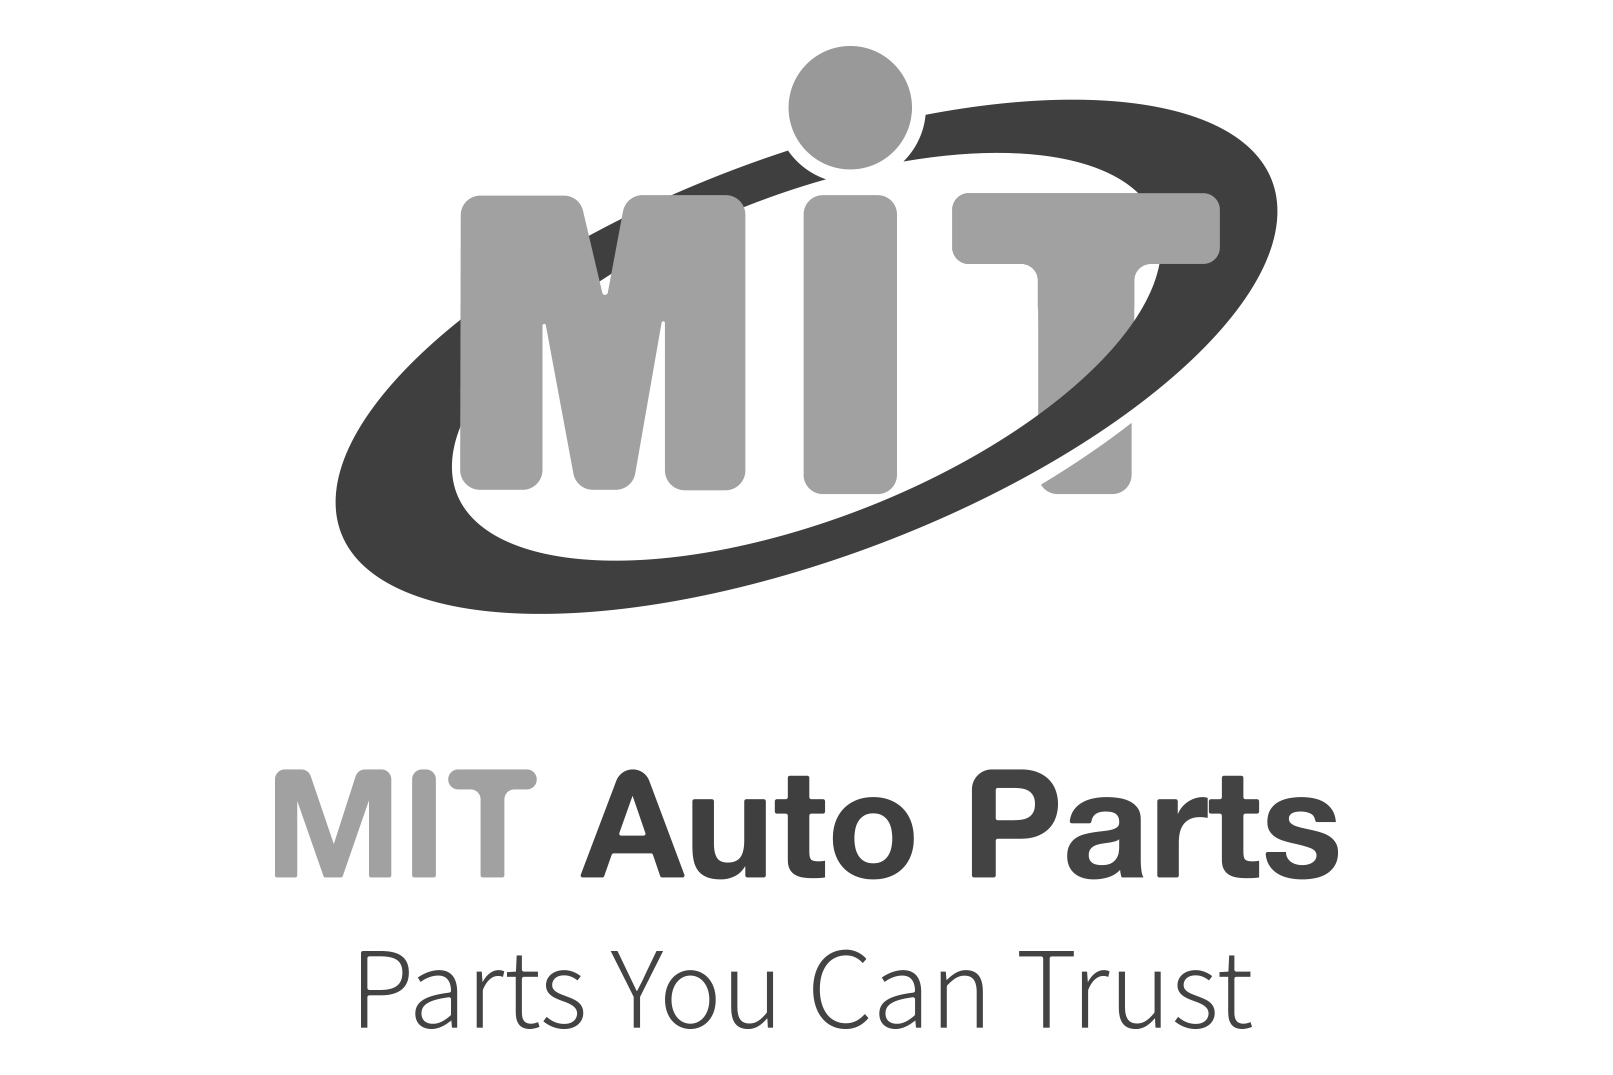 MIT Auto Parts